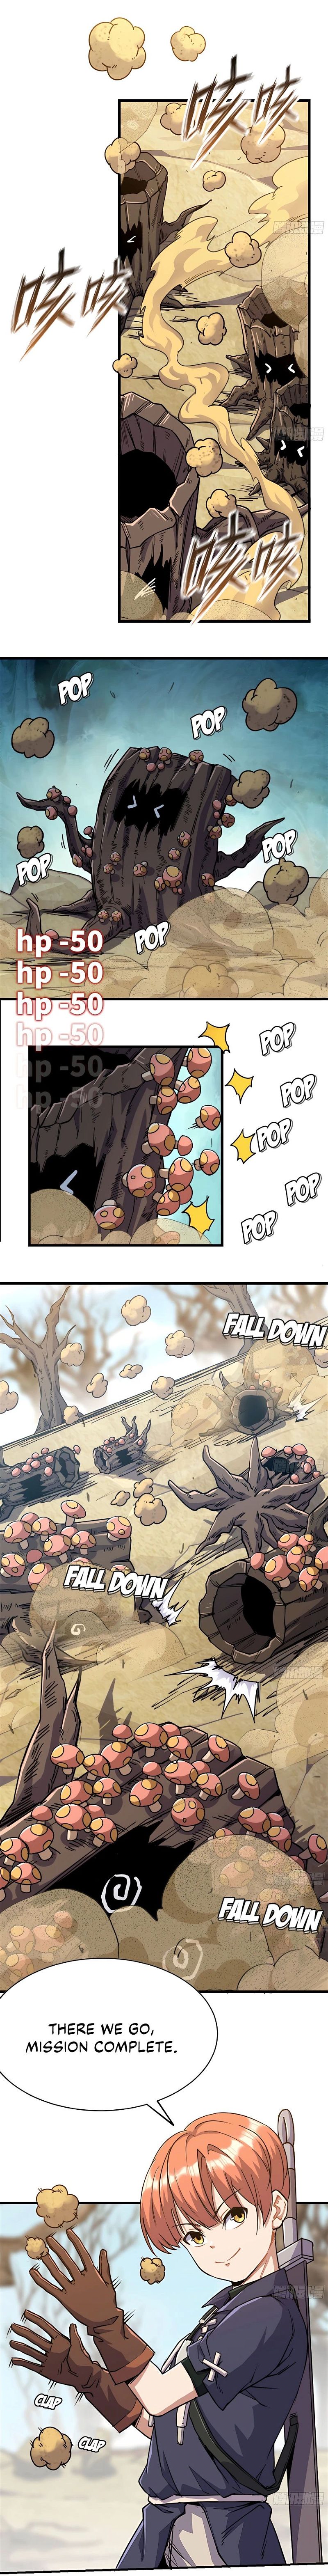 Mushroom Hero Chapter 55 page 19